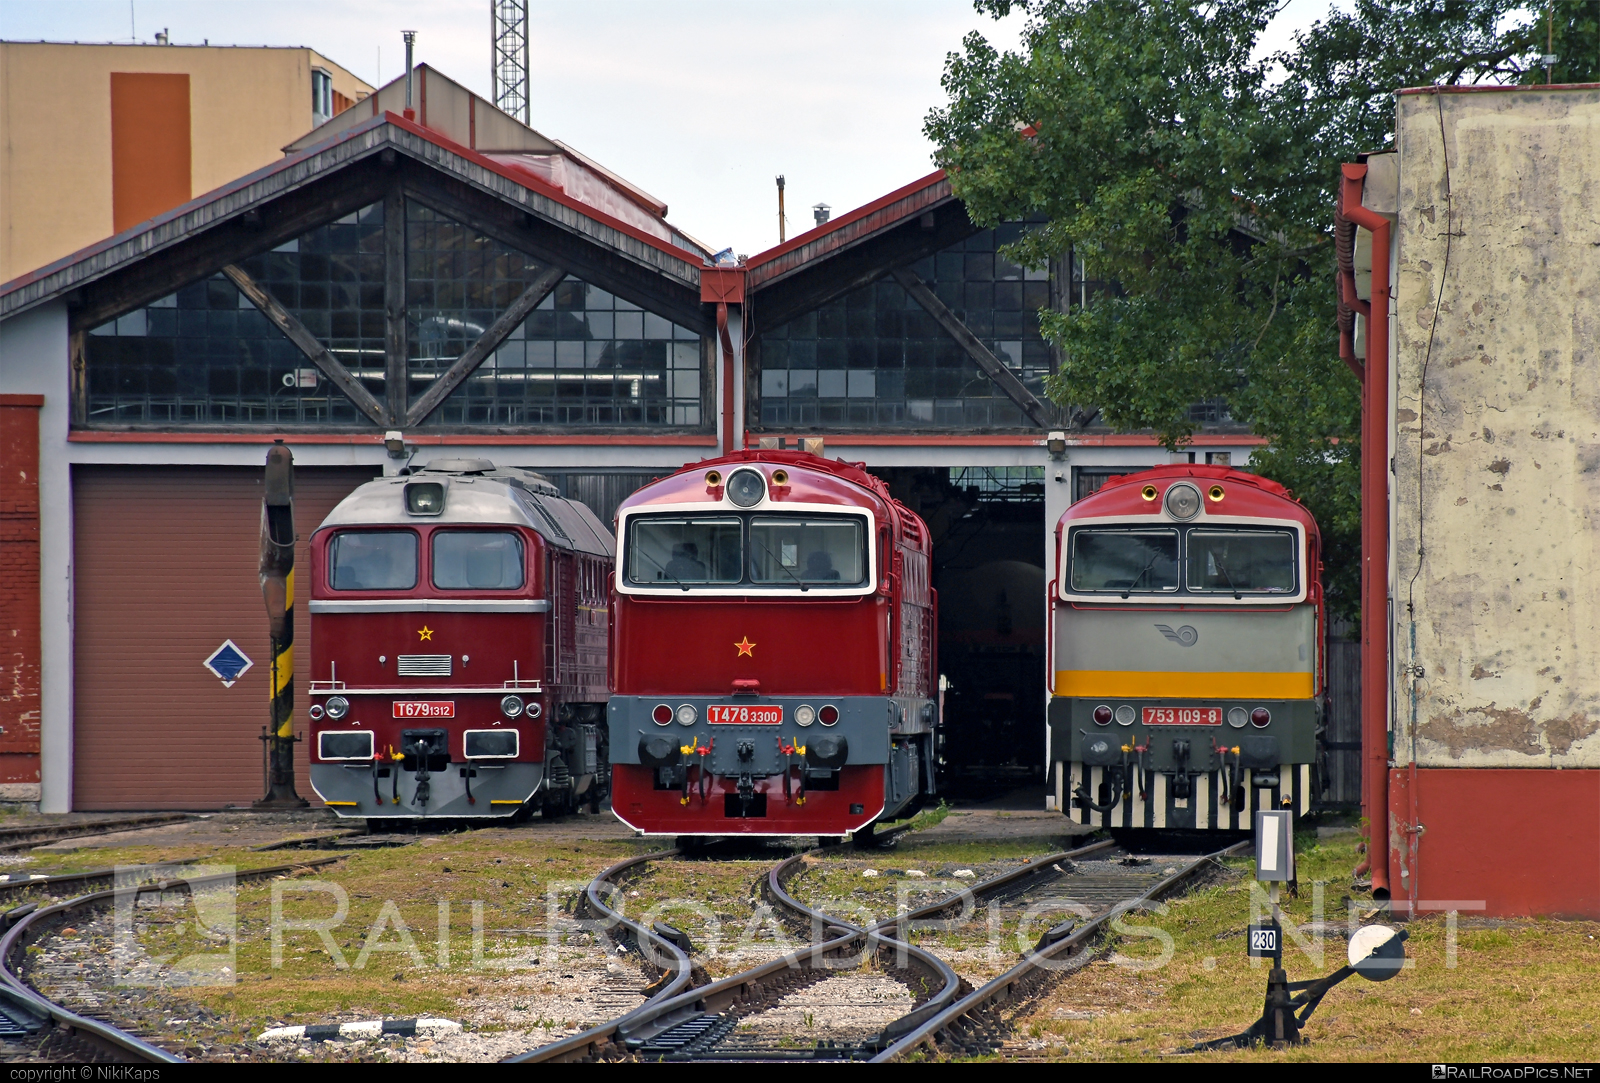 ČKD T 478.3 (753) - T478.3300 operated by Klub železničných historických vozidiel Poprad #brejlovec #ckd #ckdclass753 #ckdt4783 #csd #locomotive753 #okuliarnik